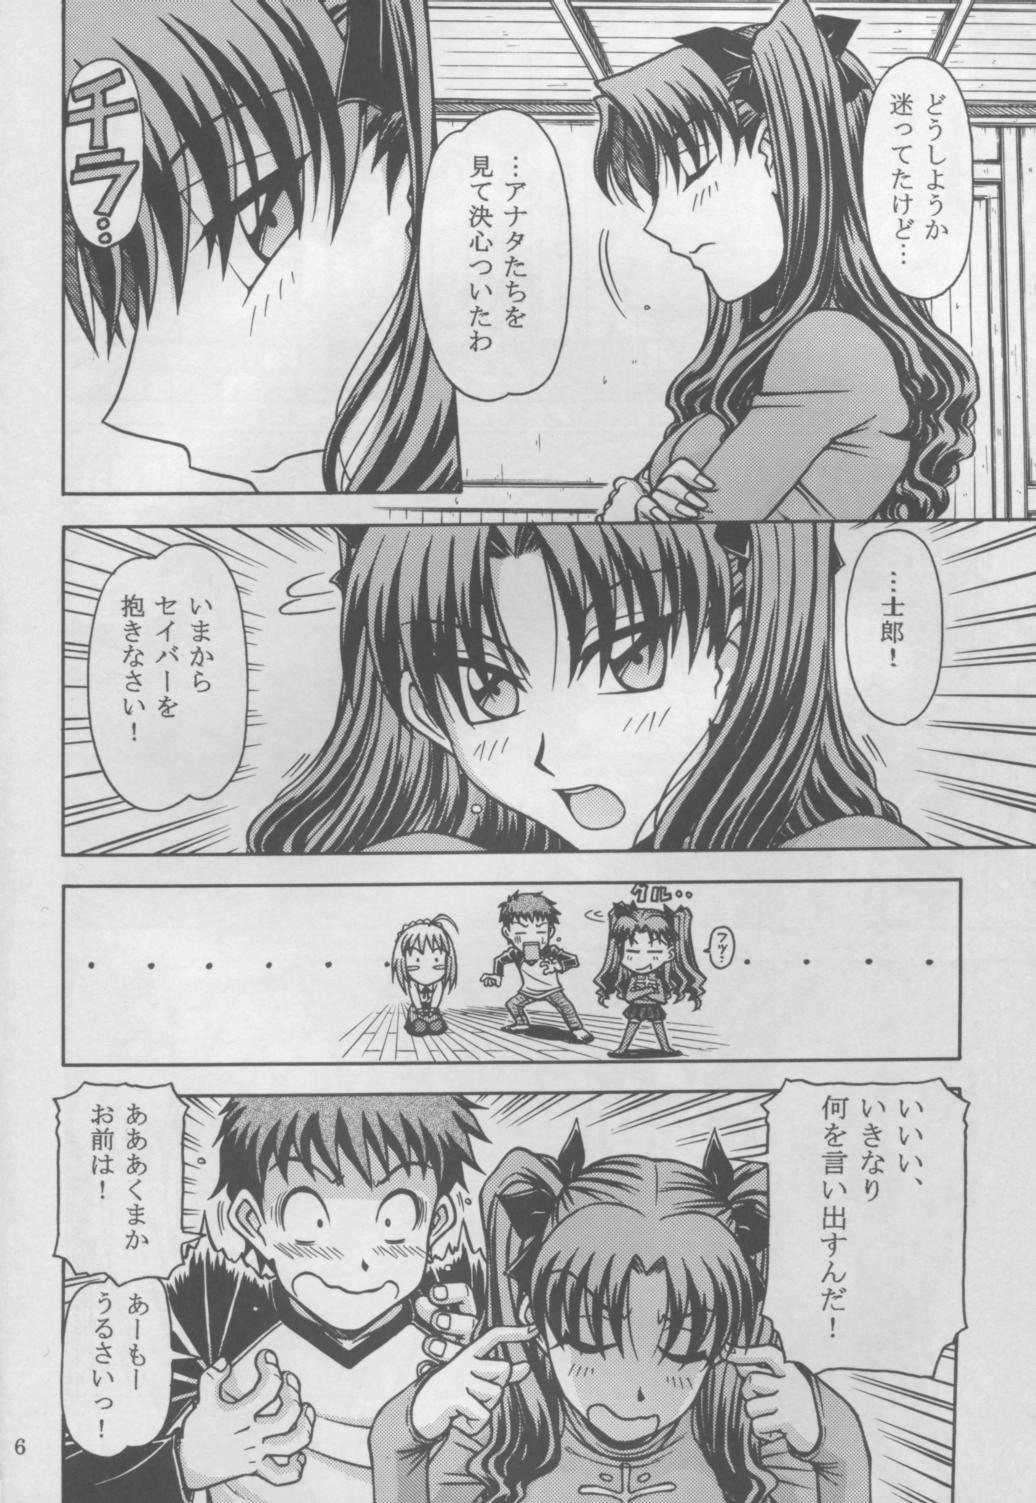 Chichona Gekkan Mapodon 1 Gatsugou - Fate stay night Glasses - Page 6